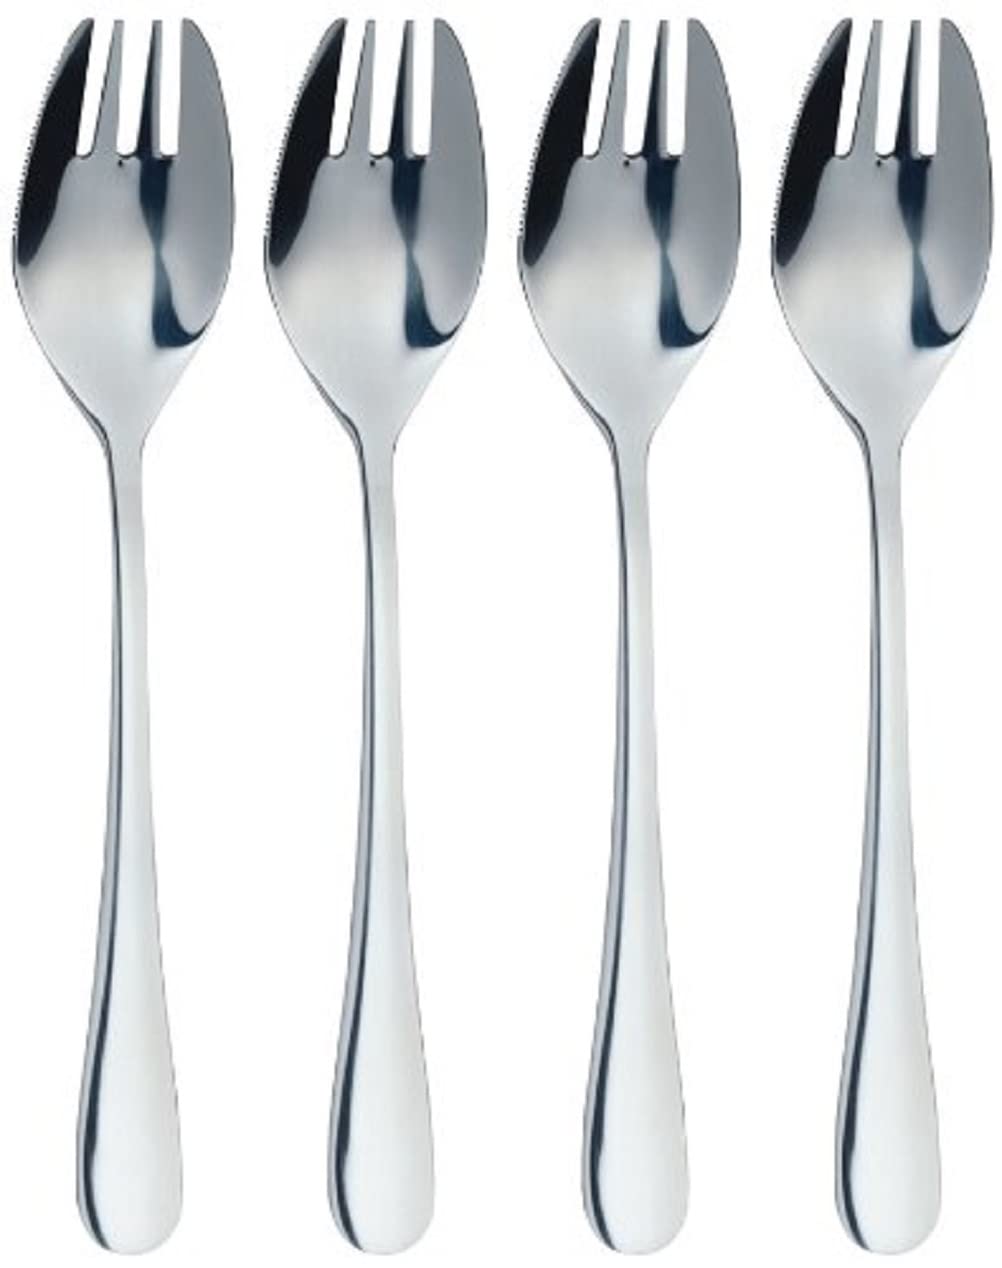 KitchenCraft MasterClass MCBUFFETF Stainless Steel Buffet Fork Set, 4 Pieces, Silver